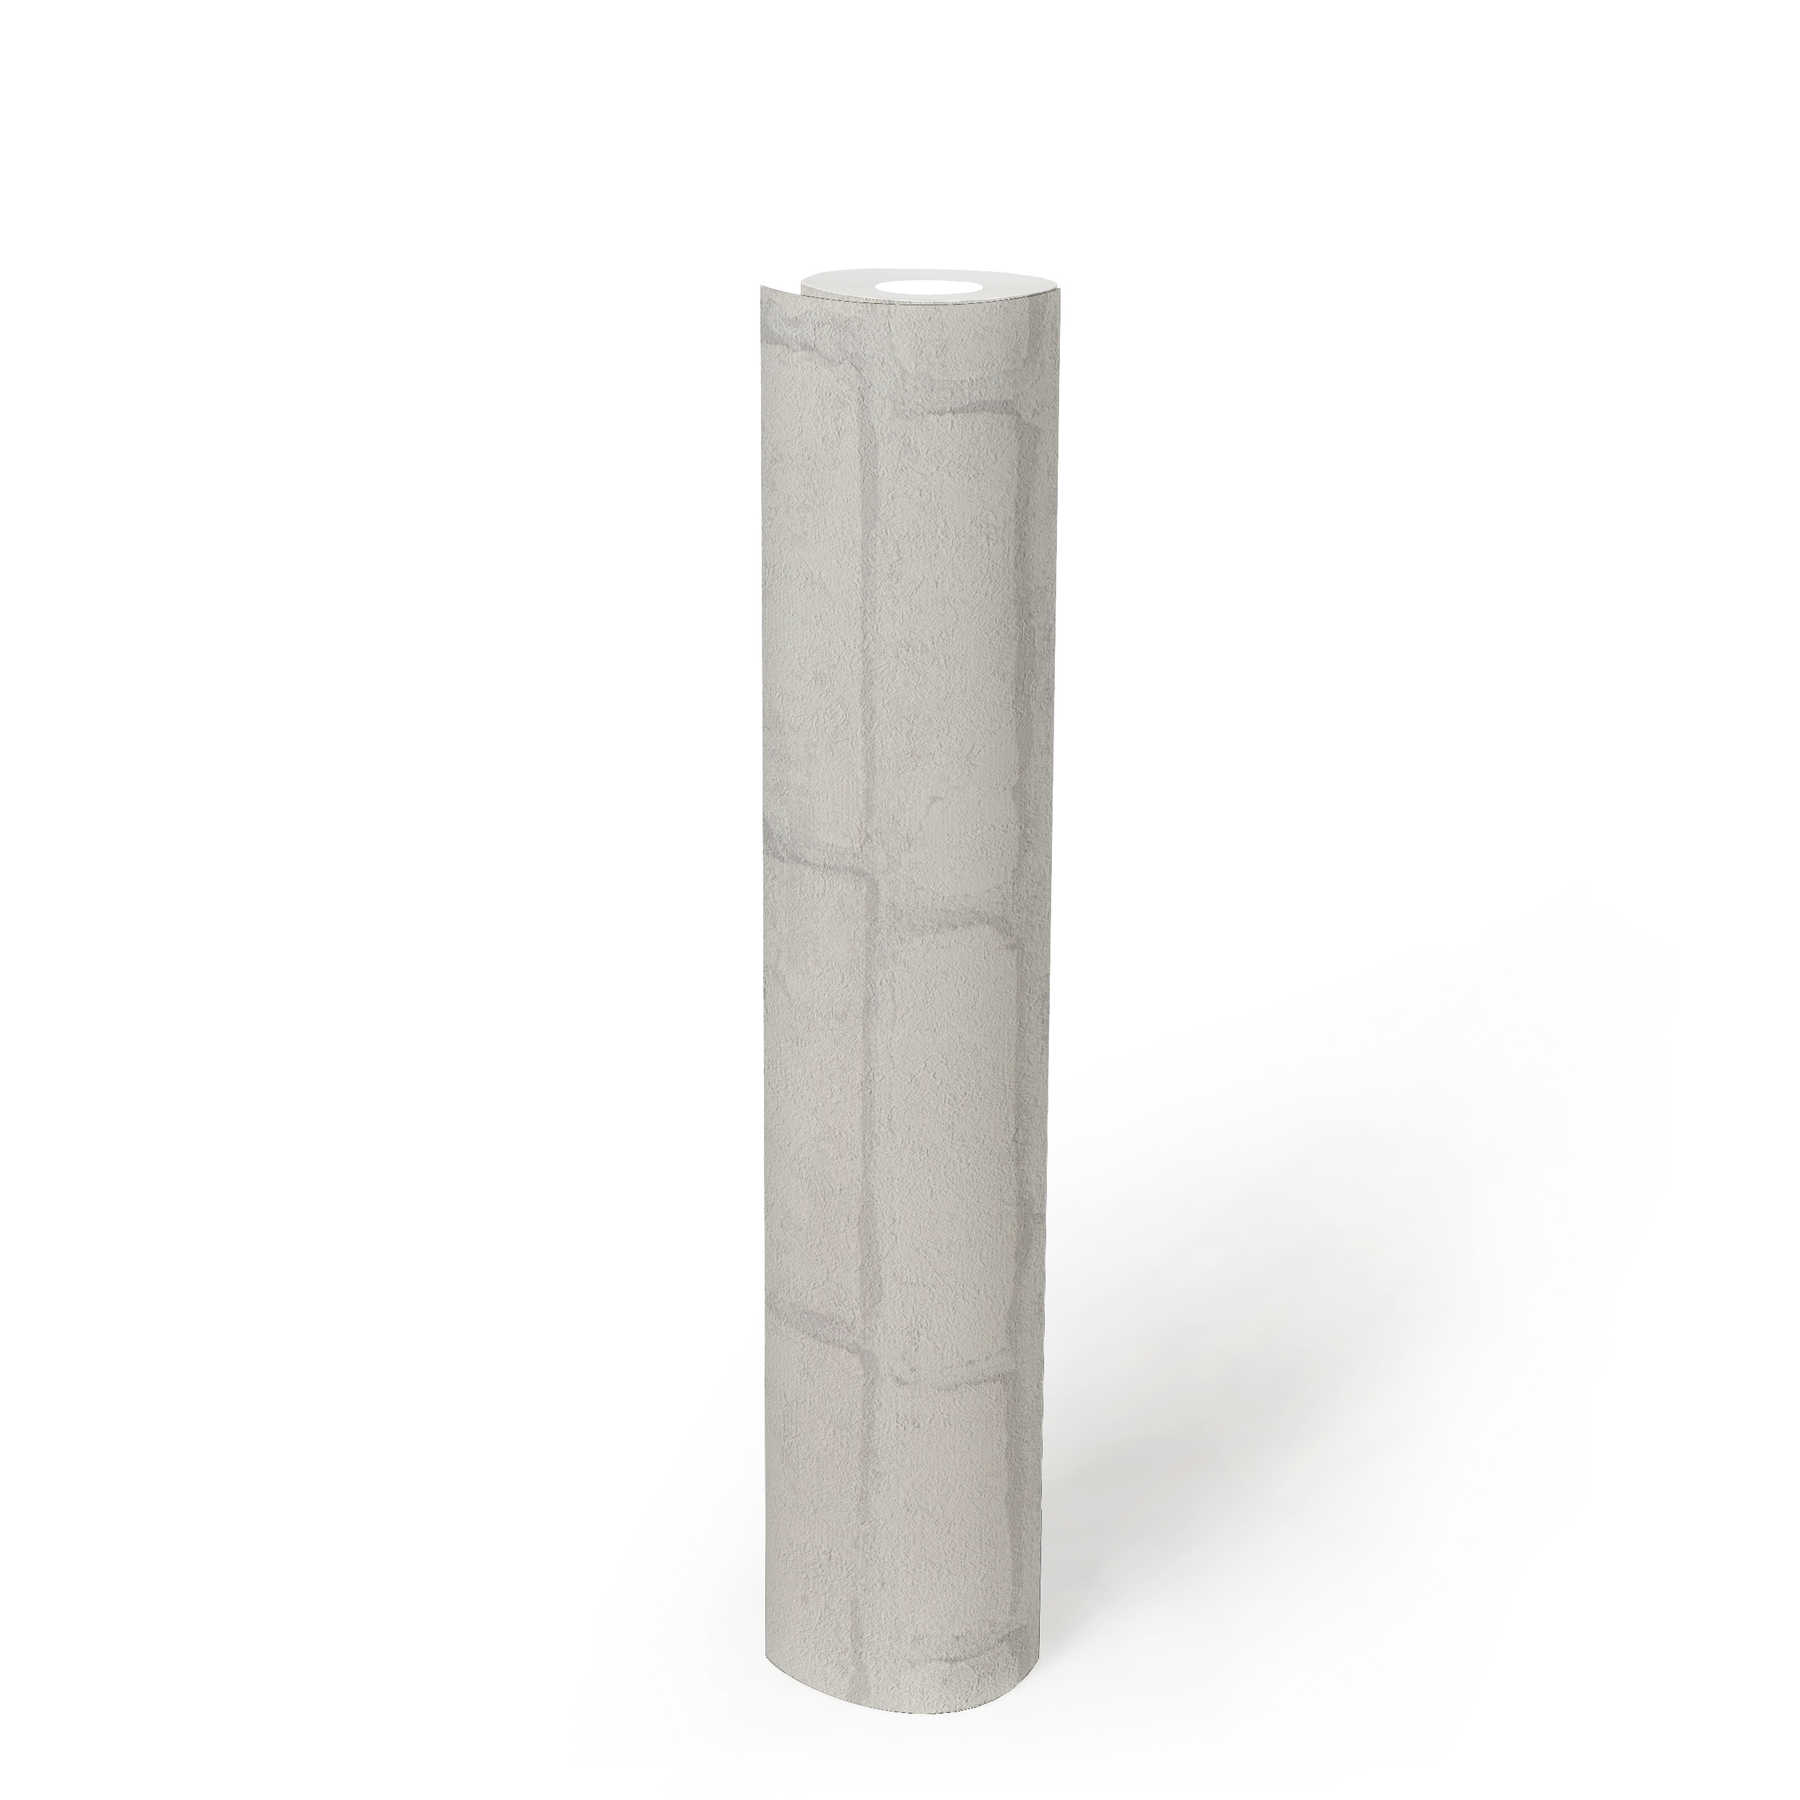             Light stone wallpaper brick pattern in industrial design - white, grey
        